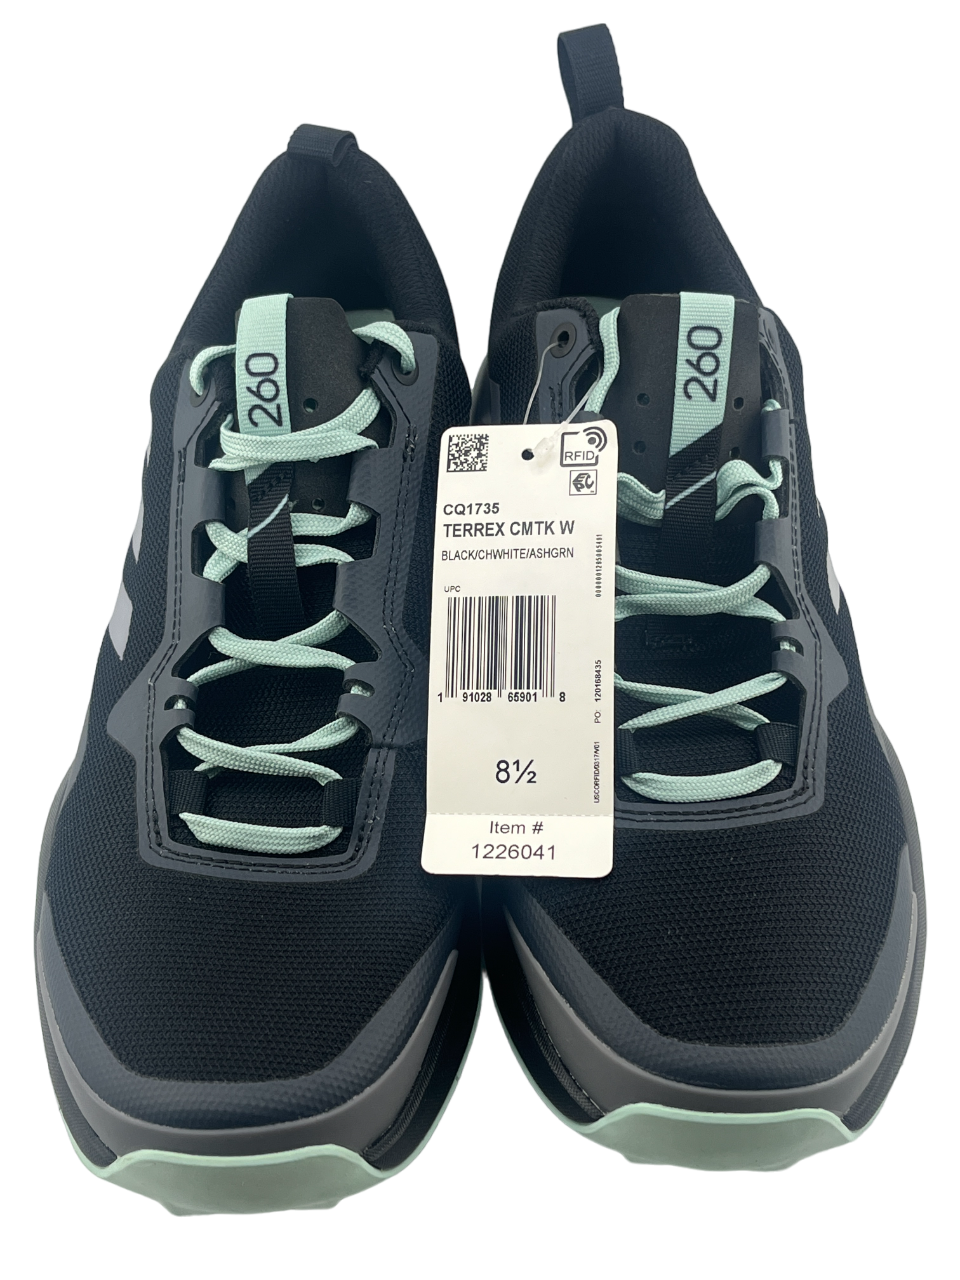 Adidas CMTK Women's Outdoor Shoes - Black Chalk White Ash Green – TCF